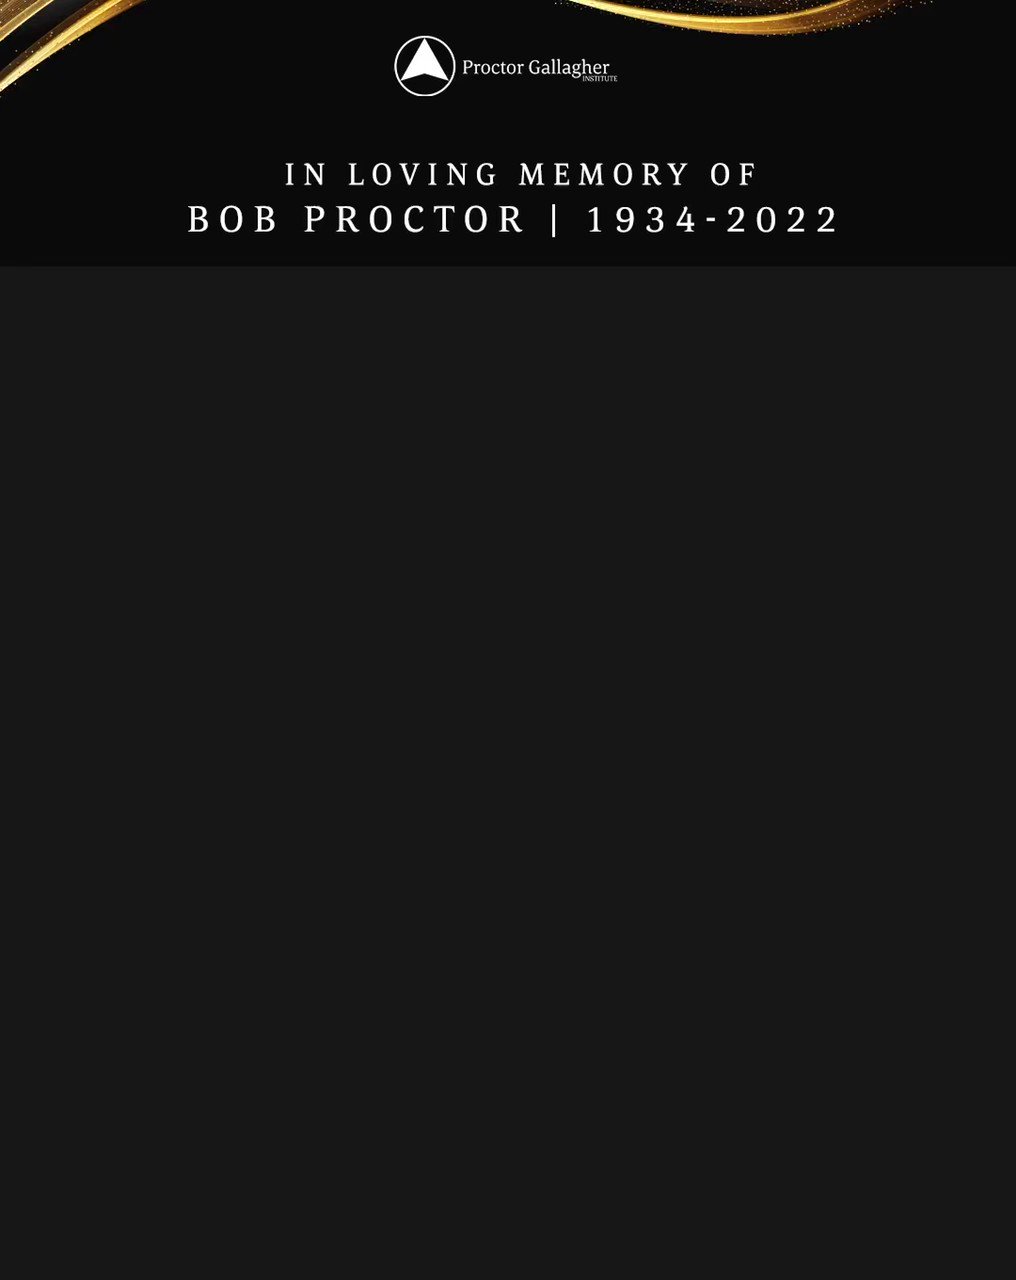 In Loving Memory of Bob Proctor 1934-2022, Release